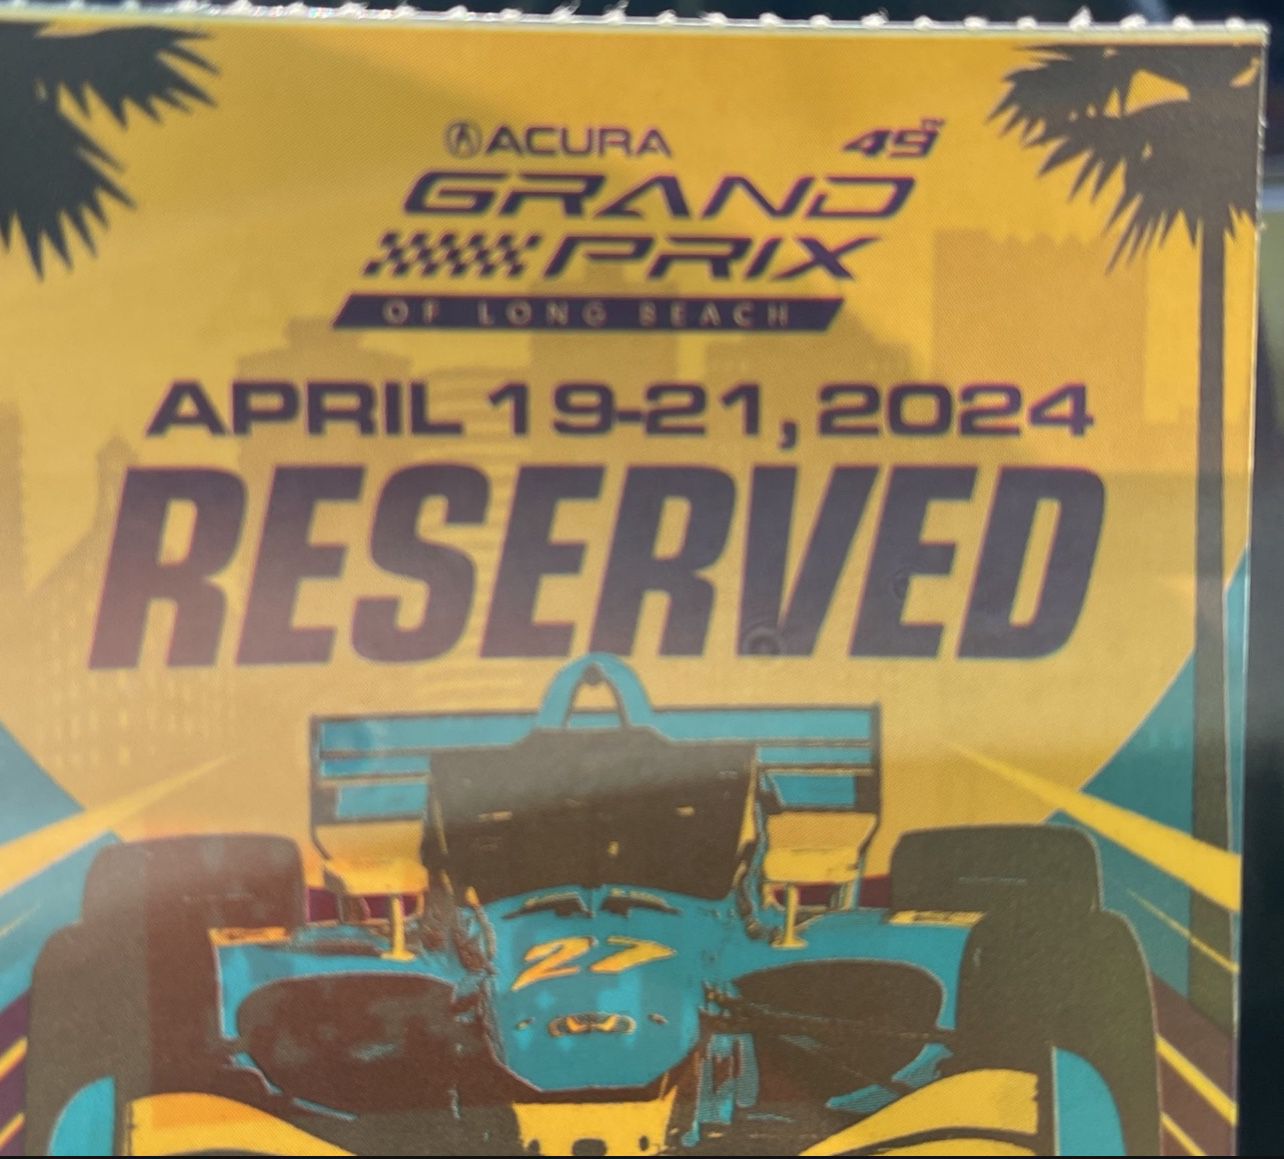 Long Beach Grand Prix Tickets